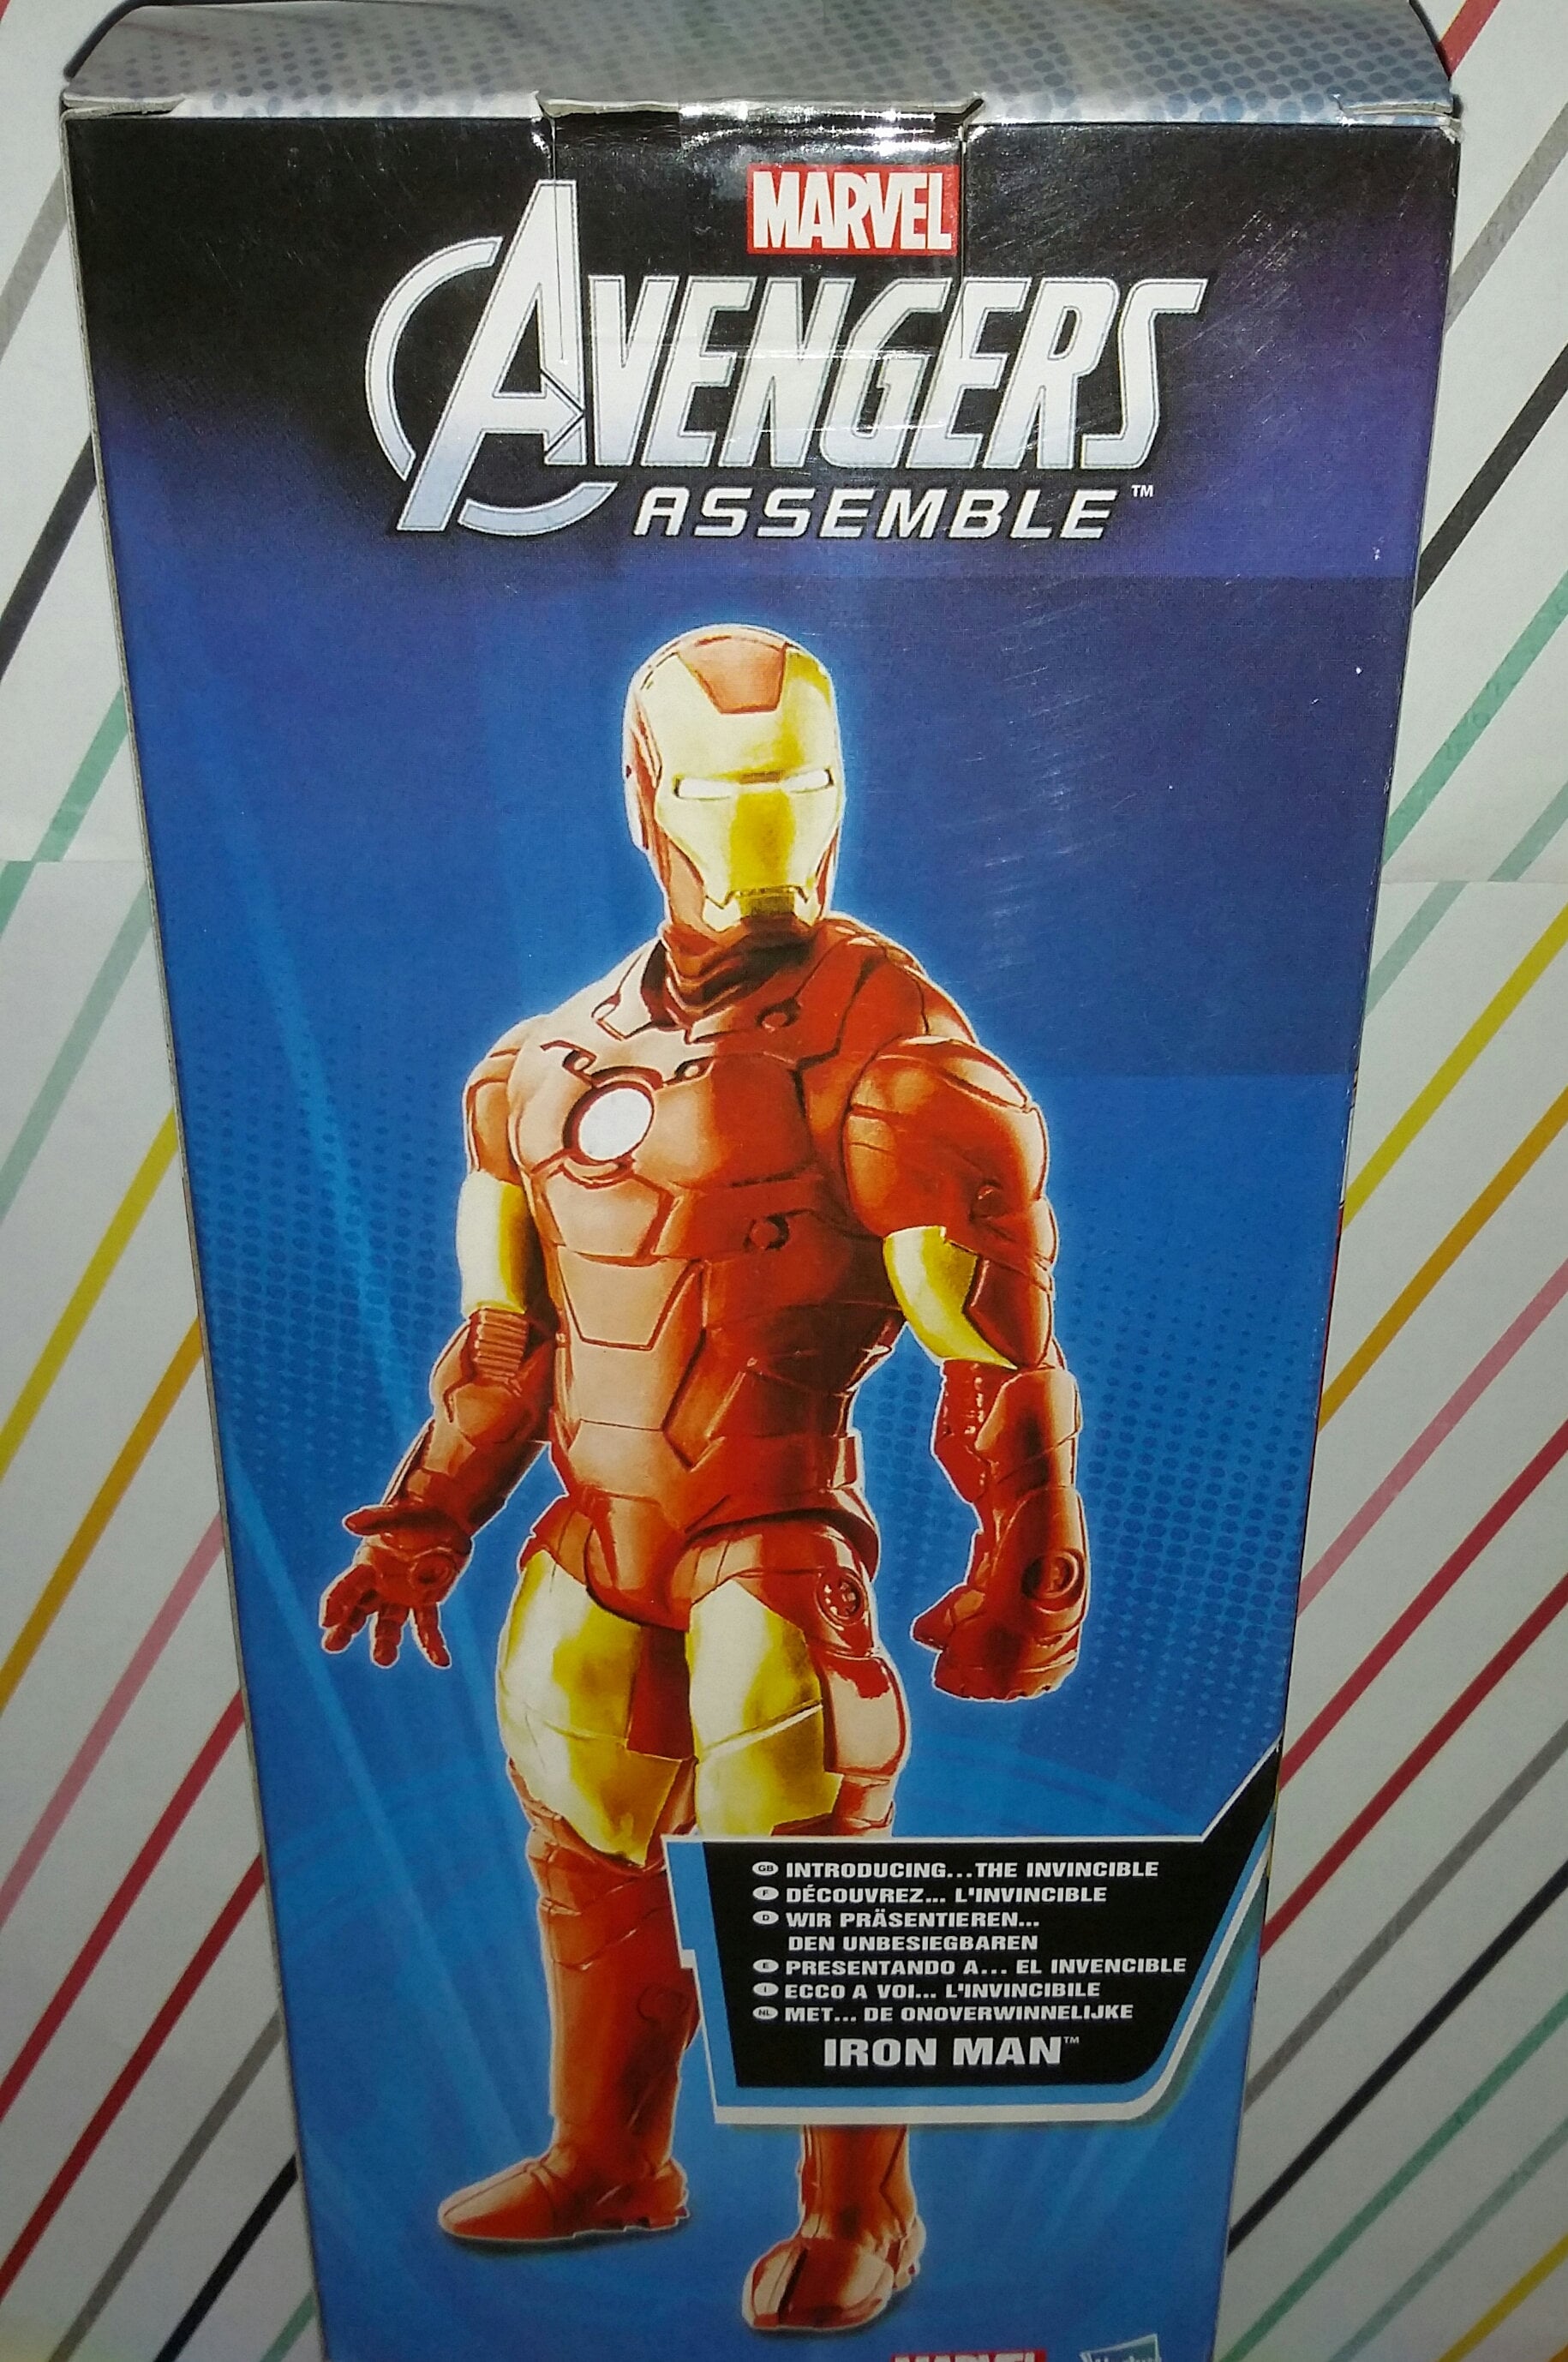 Hasbro Marvel Titan Hero 12 Iron Man or Patriot New Boxed Figure